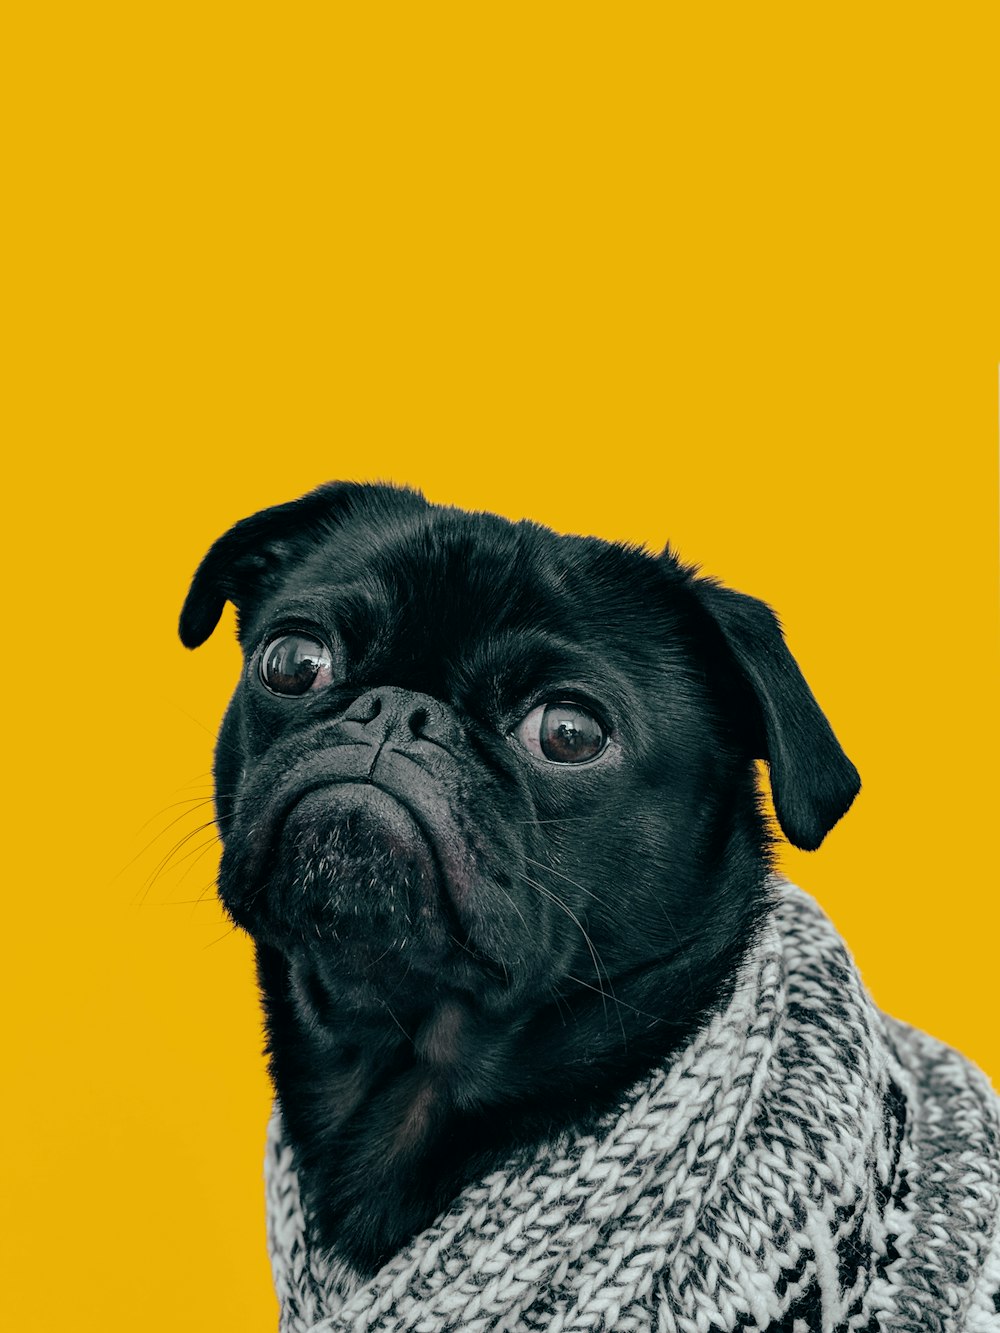 Dog Wallpapers: Free HD Download [500+ HQ] | Unsplash